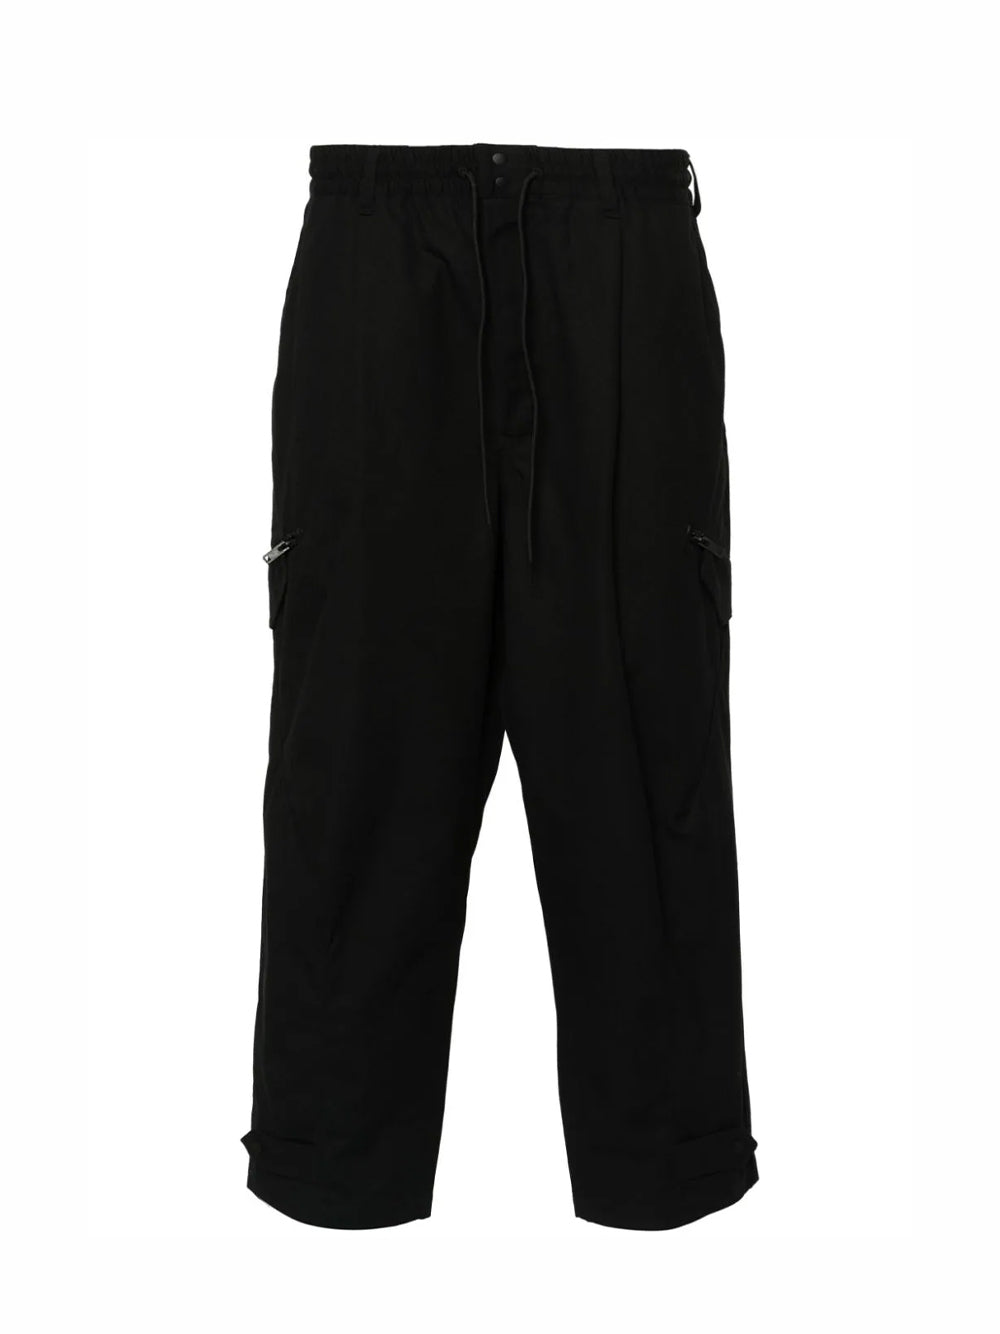 Workwear Pants (Black)